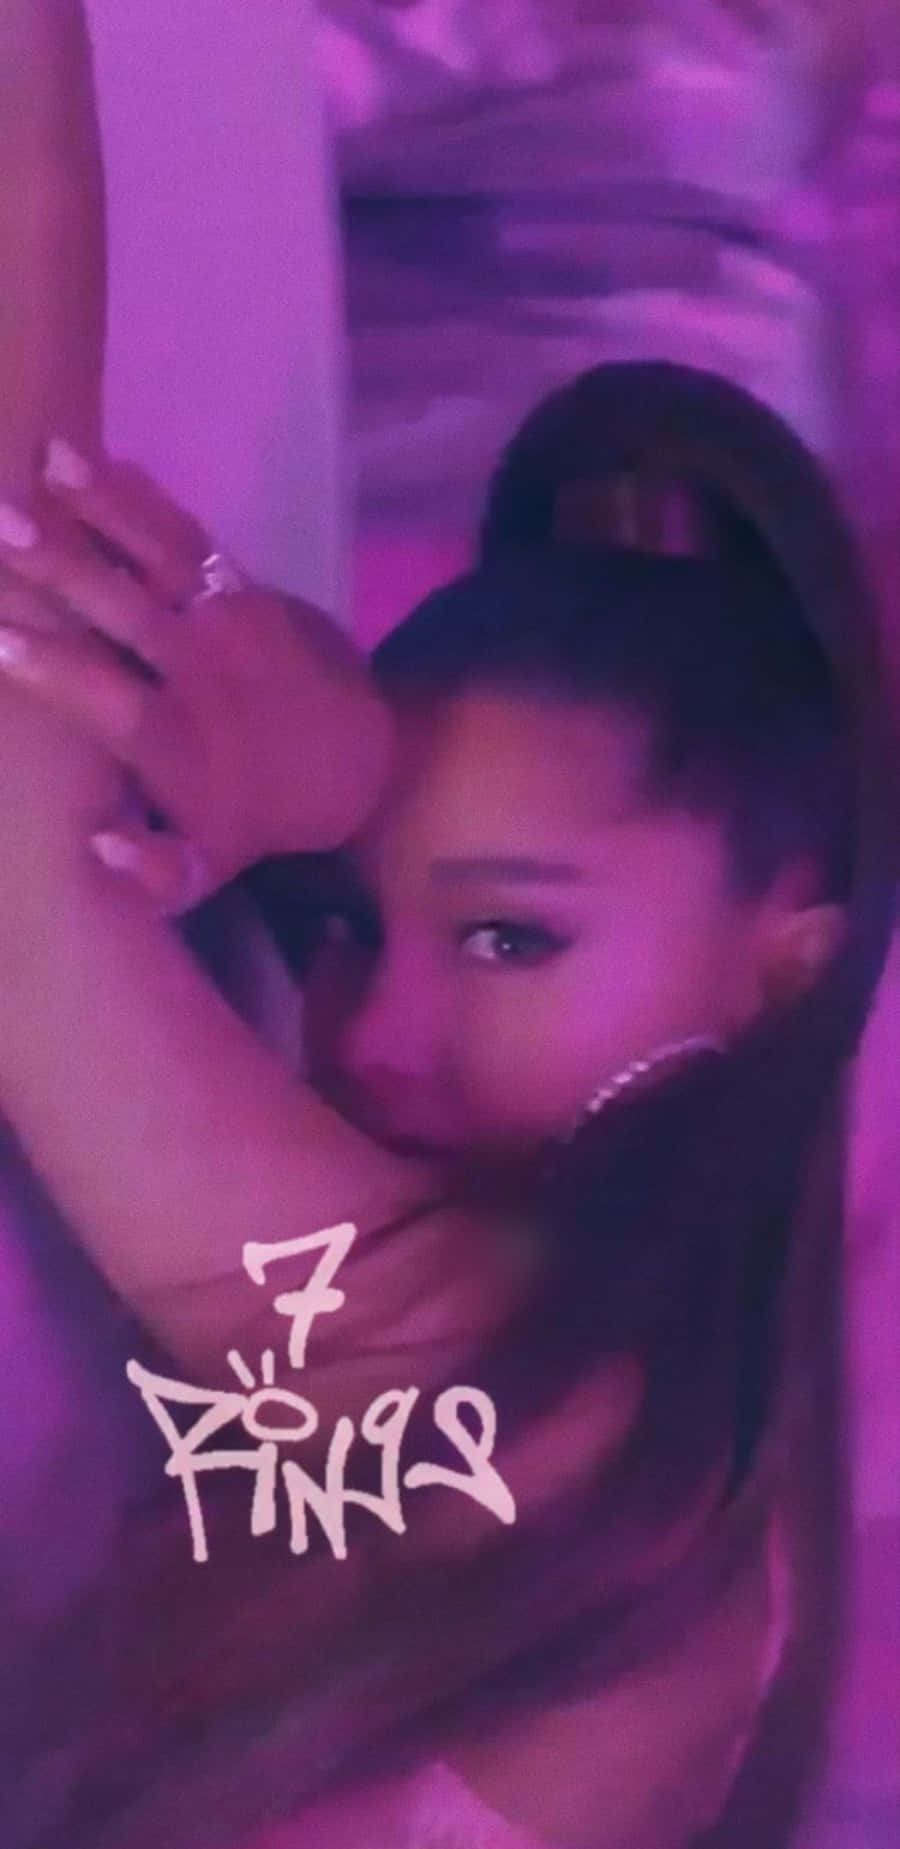 Arianagrande 7 Rings Musikvideo Wallpaper